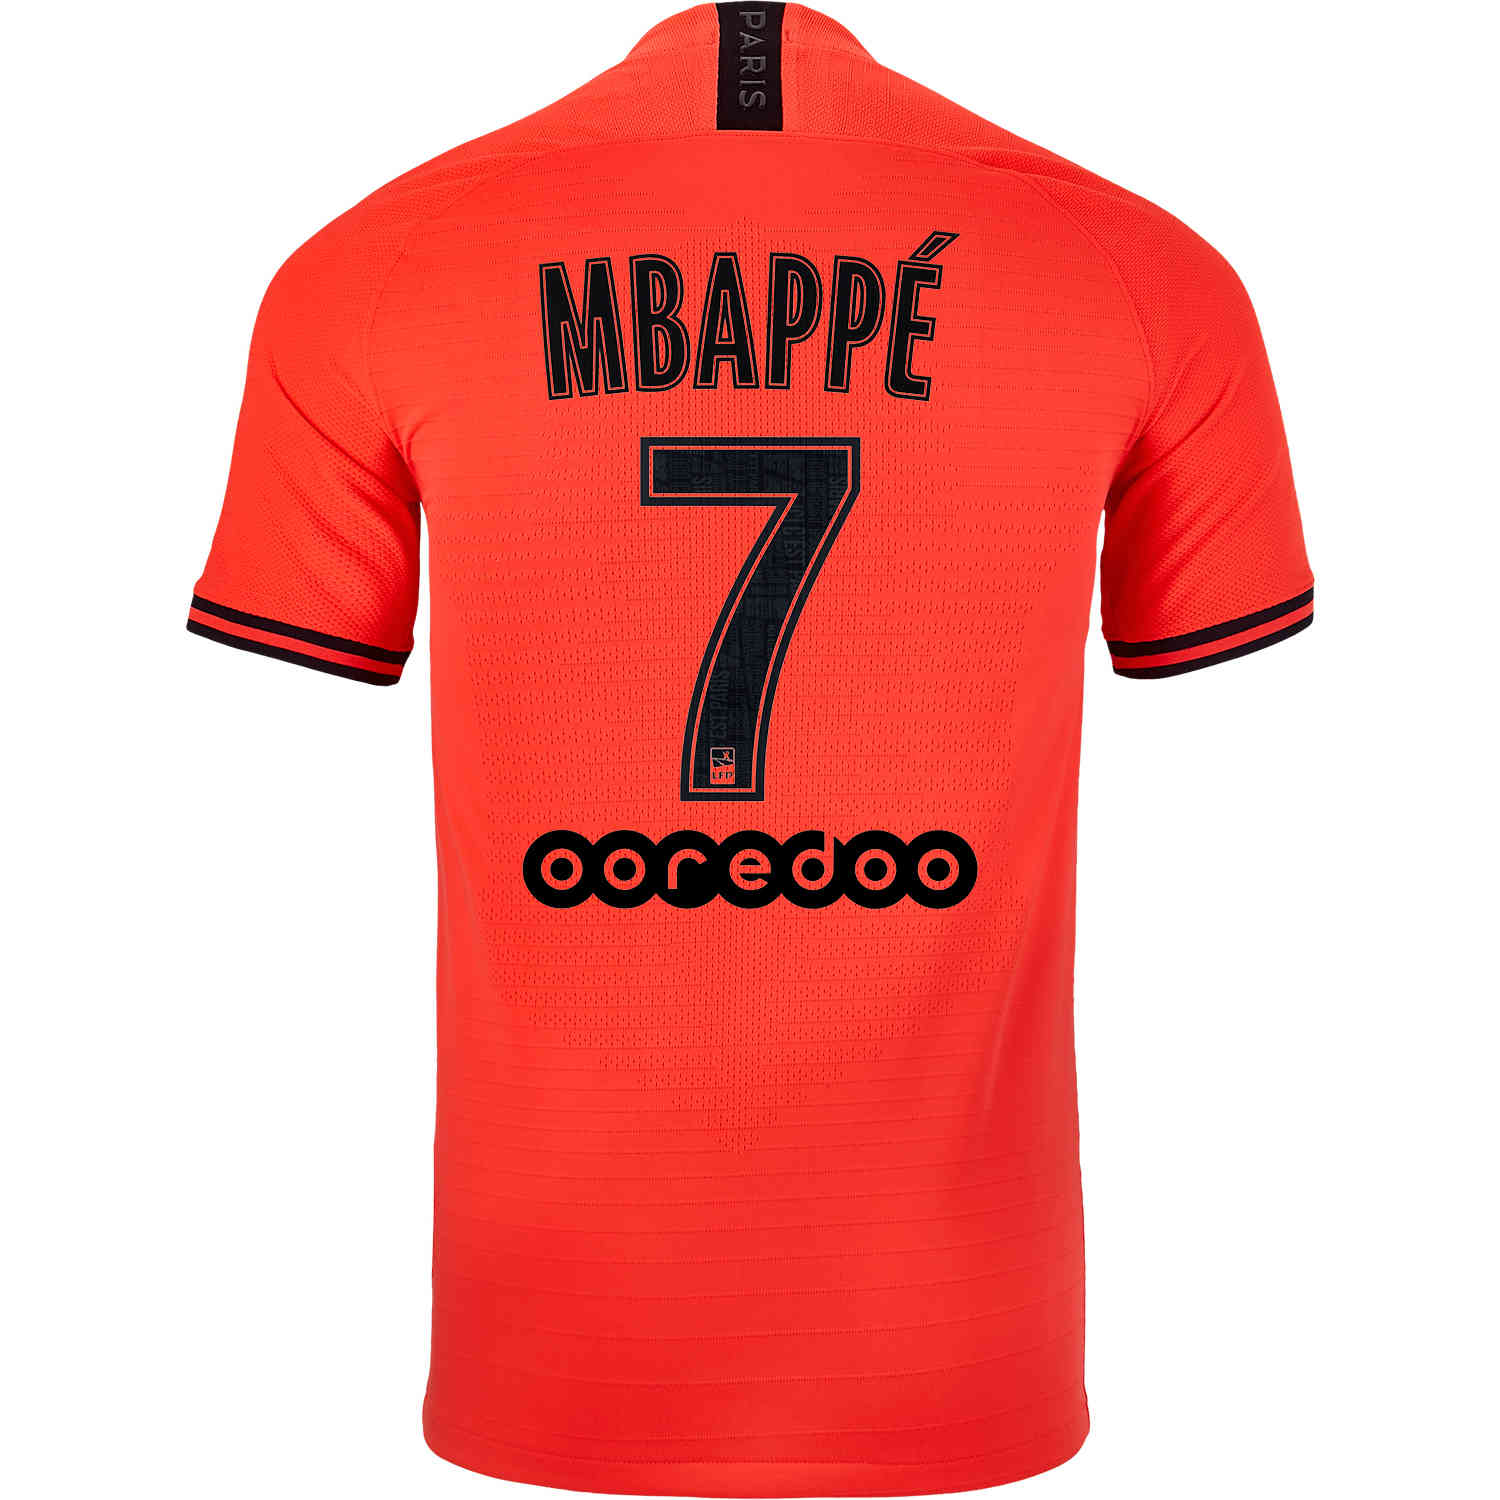 Inclinarse Parpadeo Conceder 2019/20 Jordan Kylian Mbappe PSG Away Match Jersey - SoccerPro